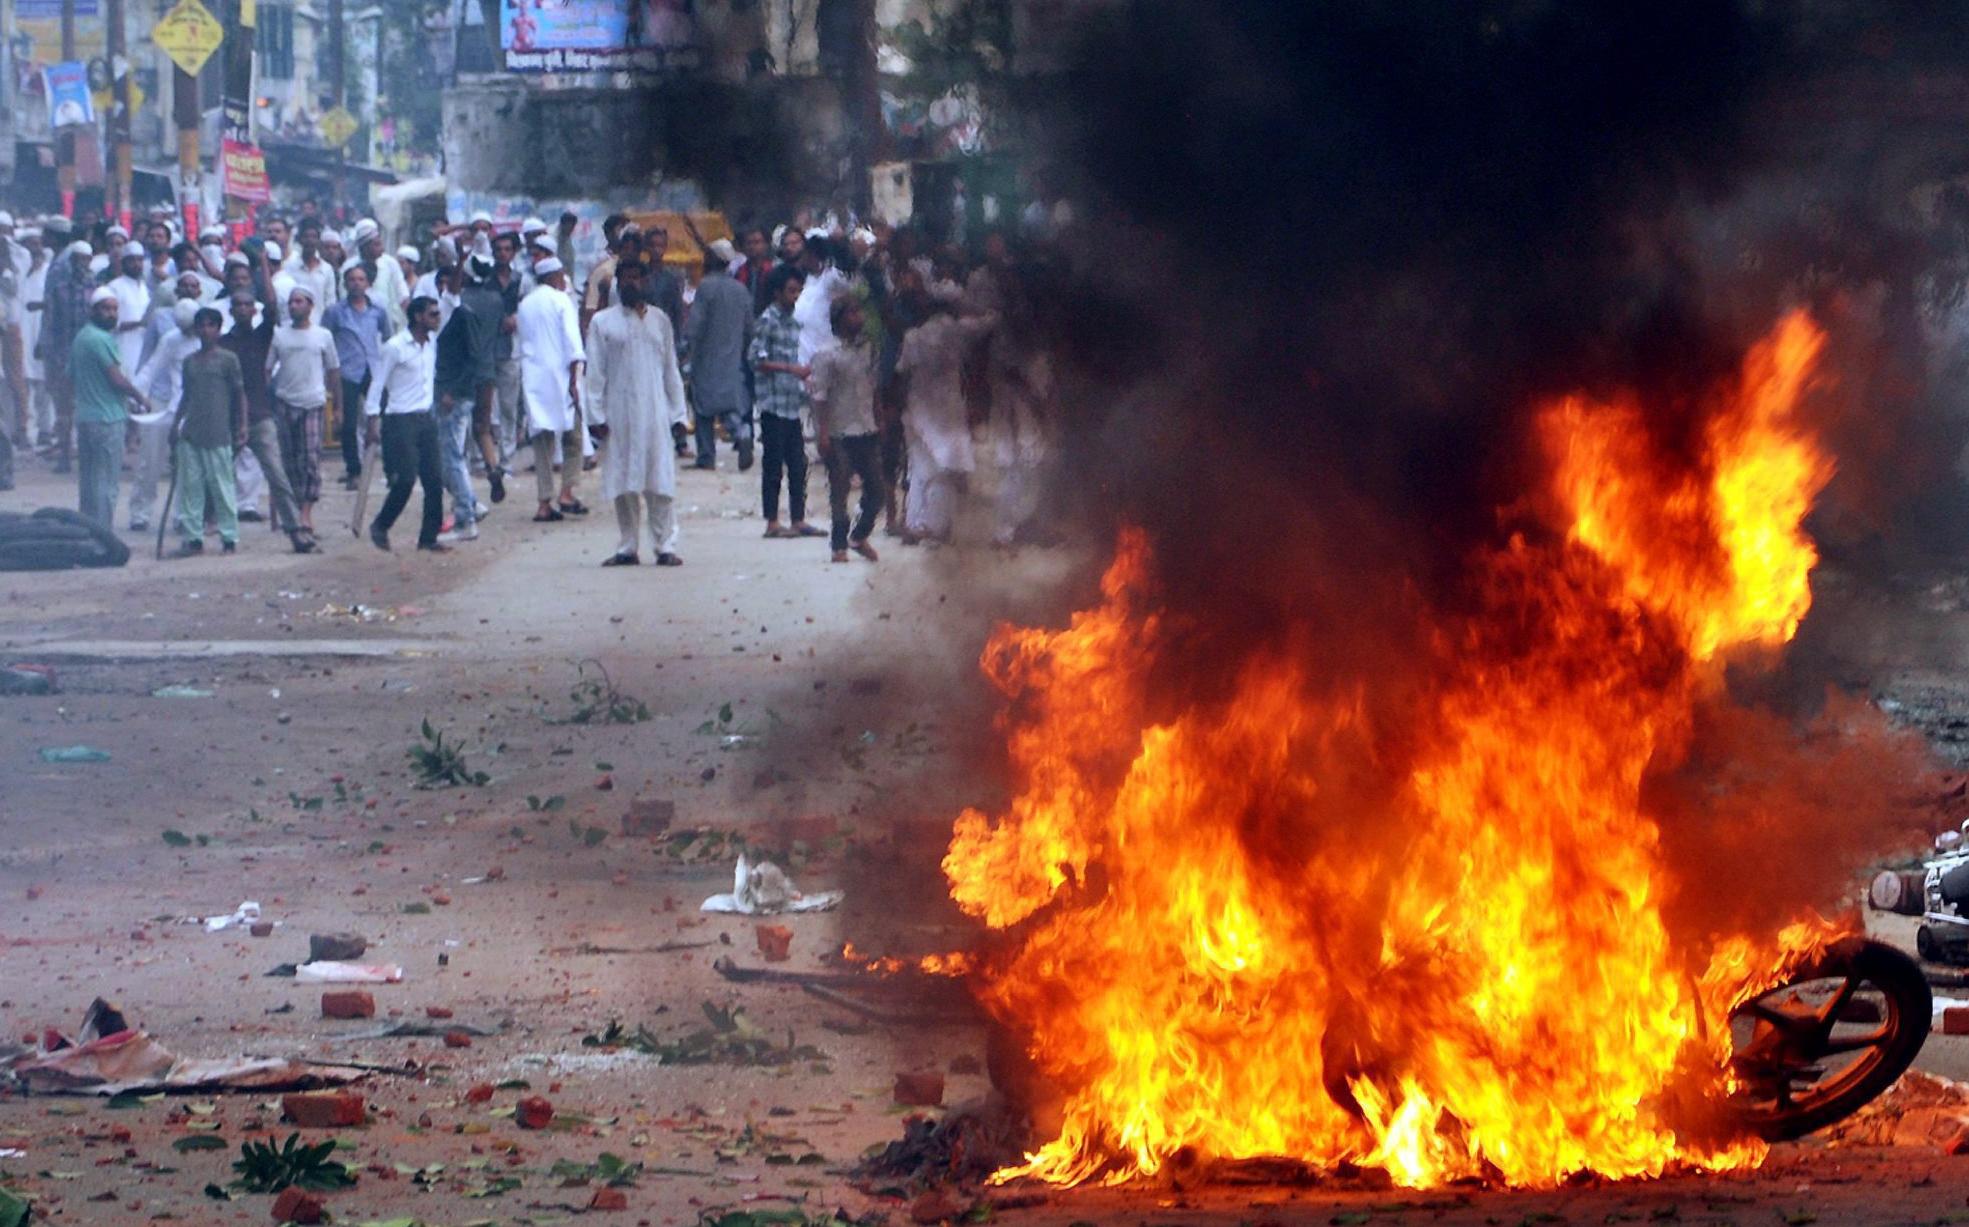 Muslim Sikh Land dispute that led to Saharanpur riots (2014)